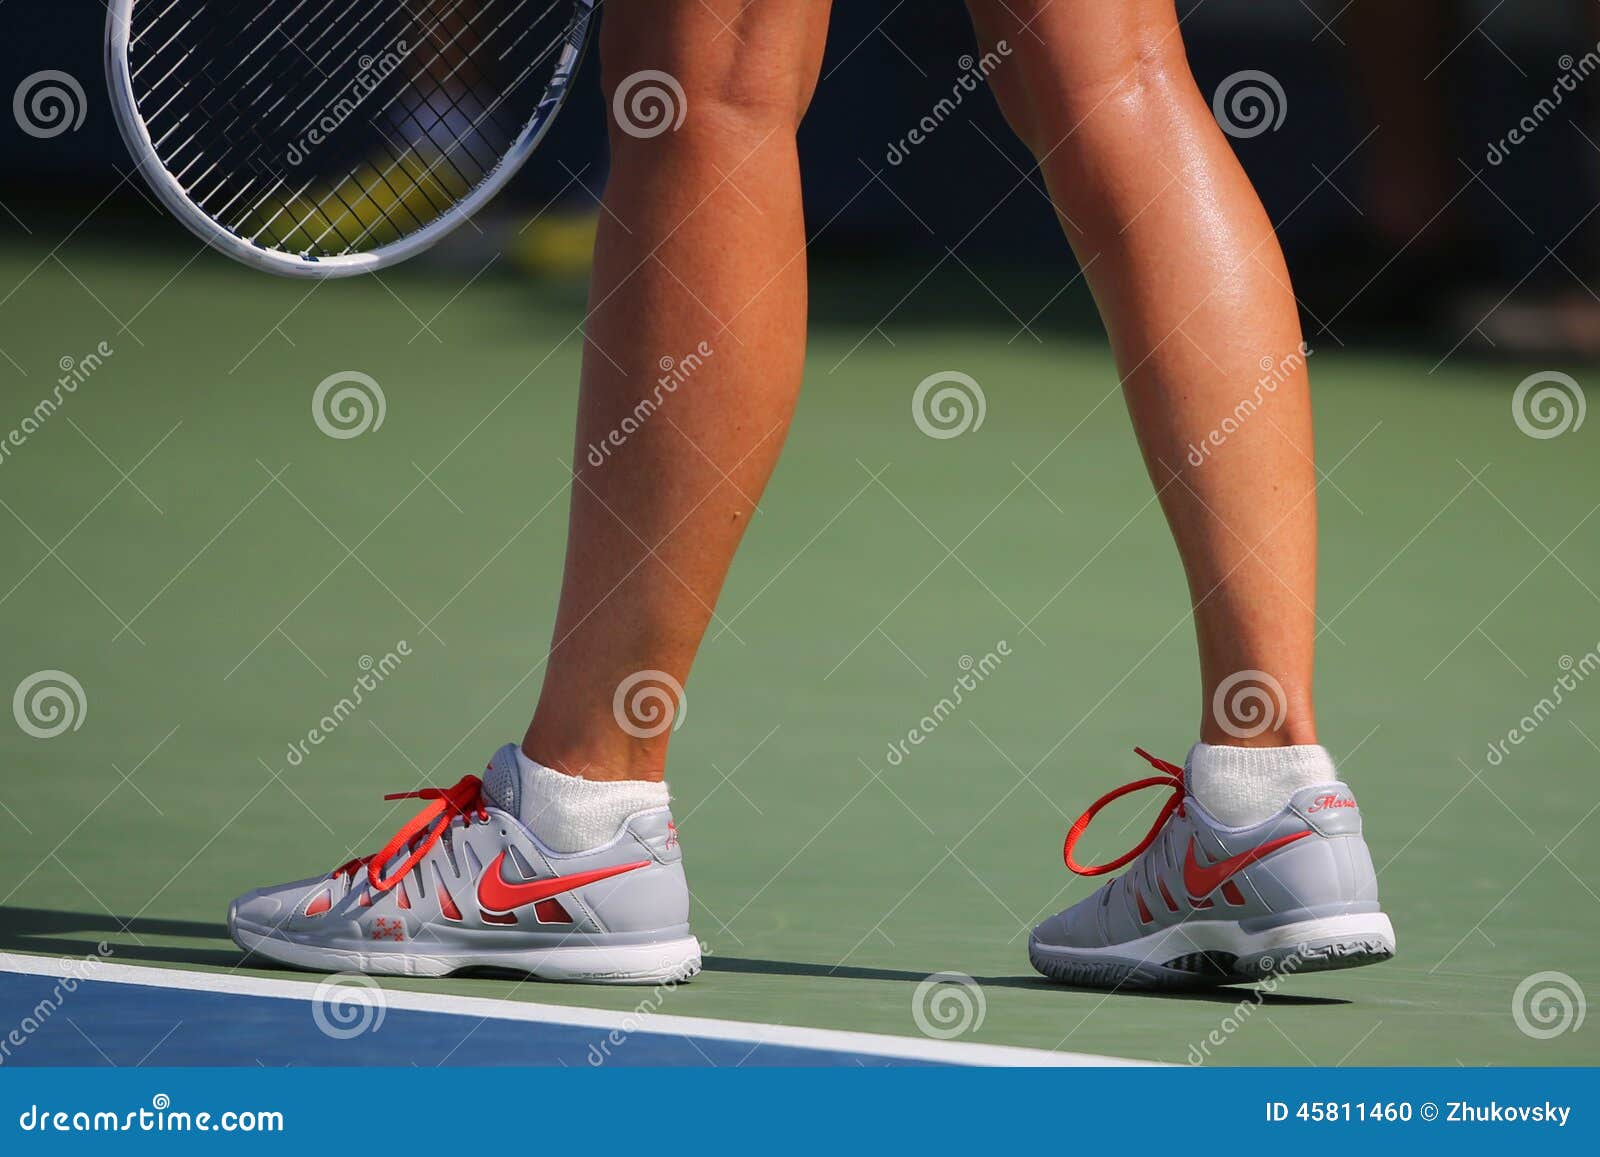 Five Times Grand Slam Champion Mariya Sharapova Wears Custom Nike Tennis  Shoes during Match at US Open 2014 Editorial Image - Image of action, nike:  45811460